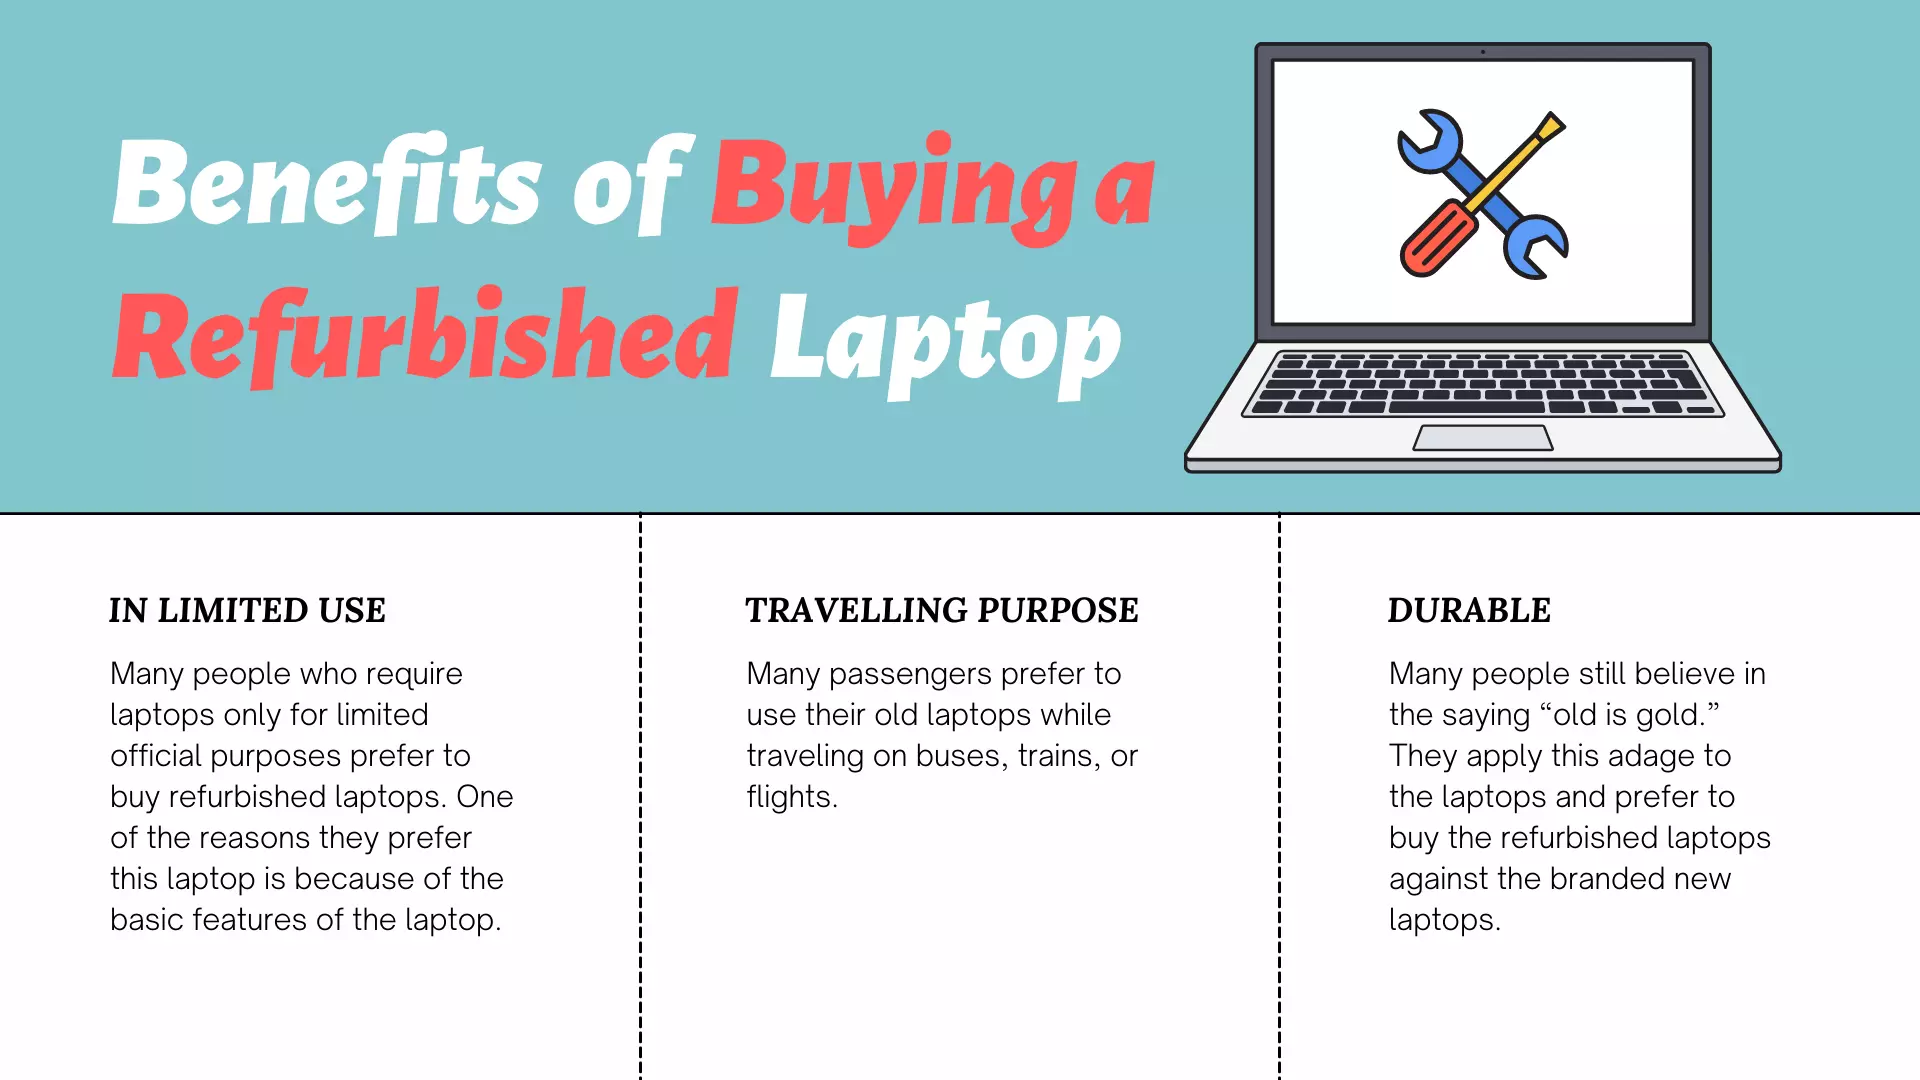 Benefits of Buying a Refurbished Laptop